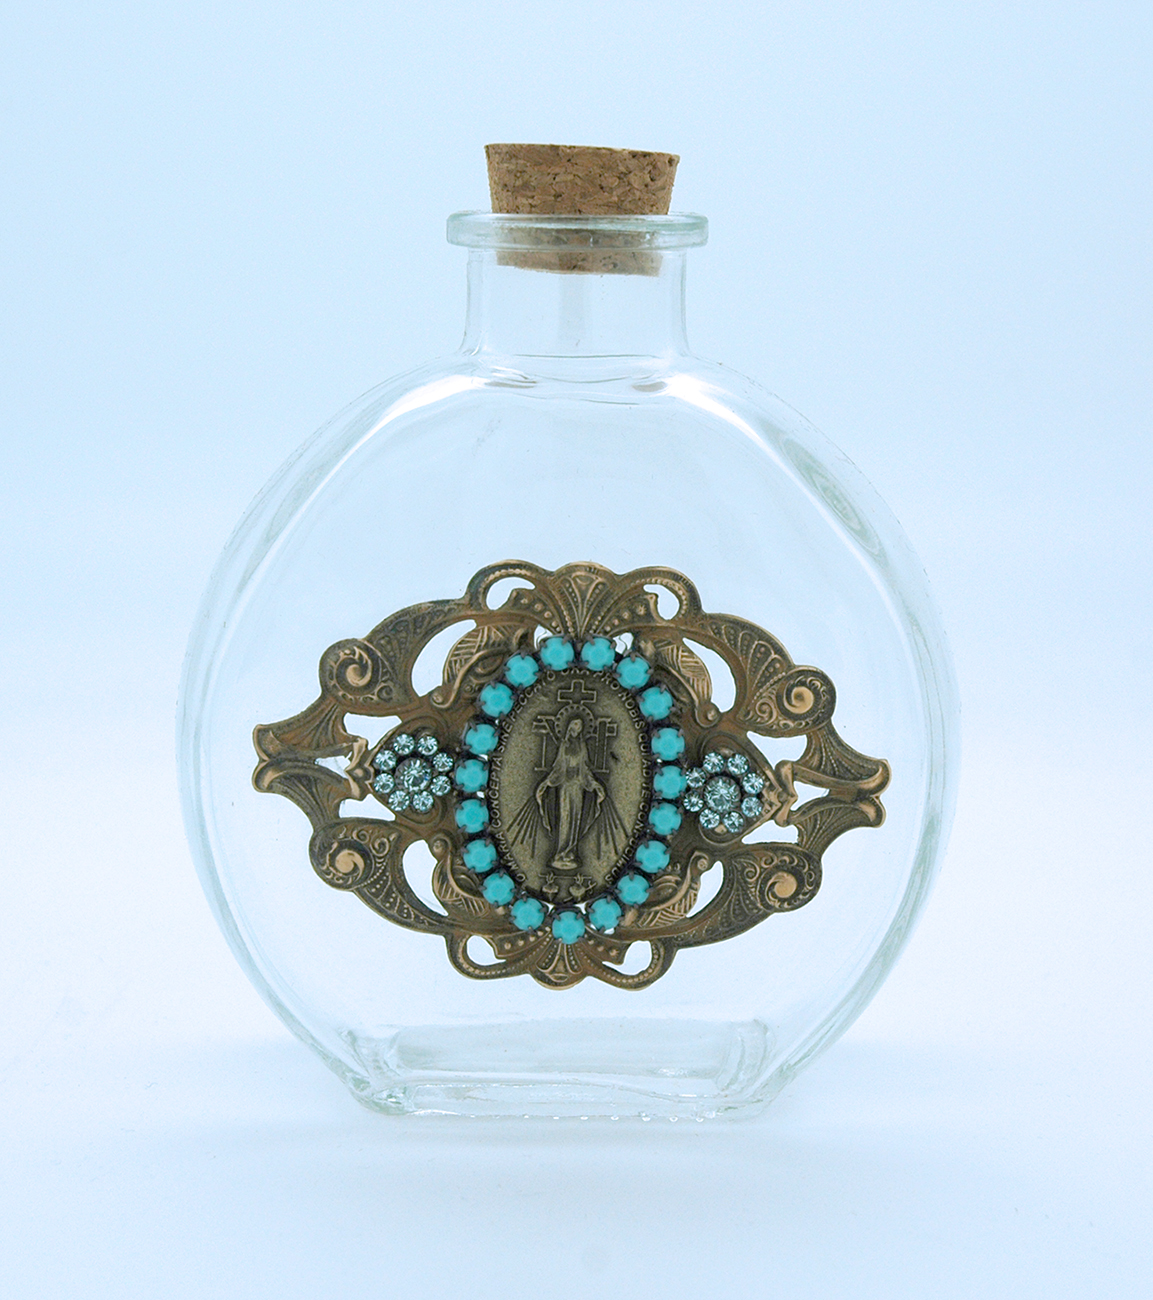 VHWB4 - Vintage Style Holy Water Bottle, Miraculous Medal, Turquoise Swarovski Crystals